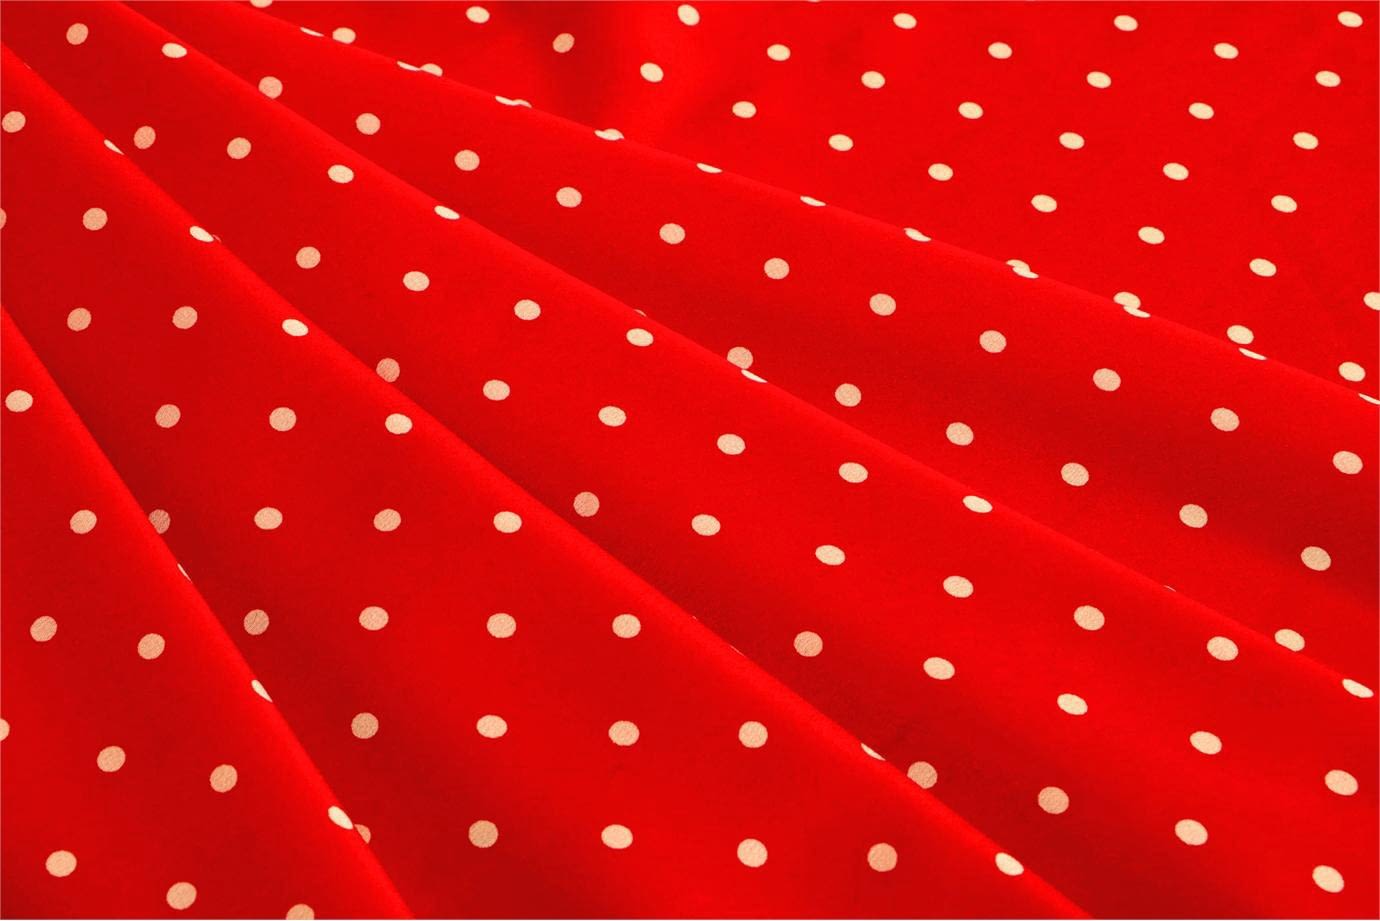 Gris blanc polka dot spot coton imprimé dress-making crafts tissu matériau 